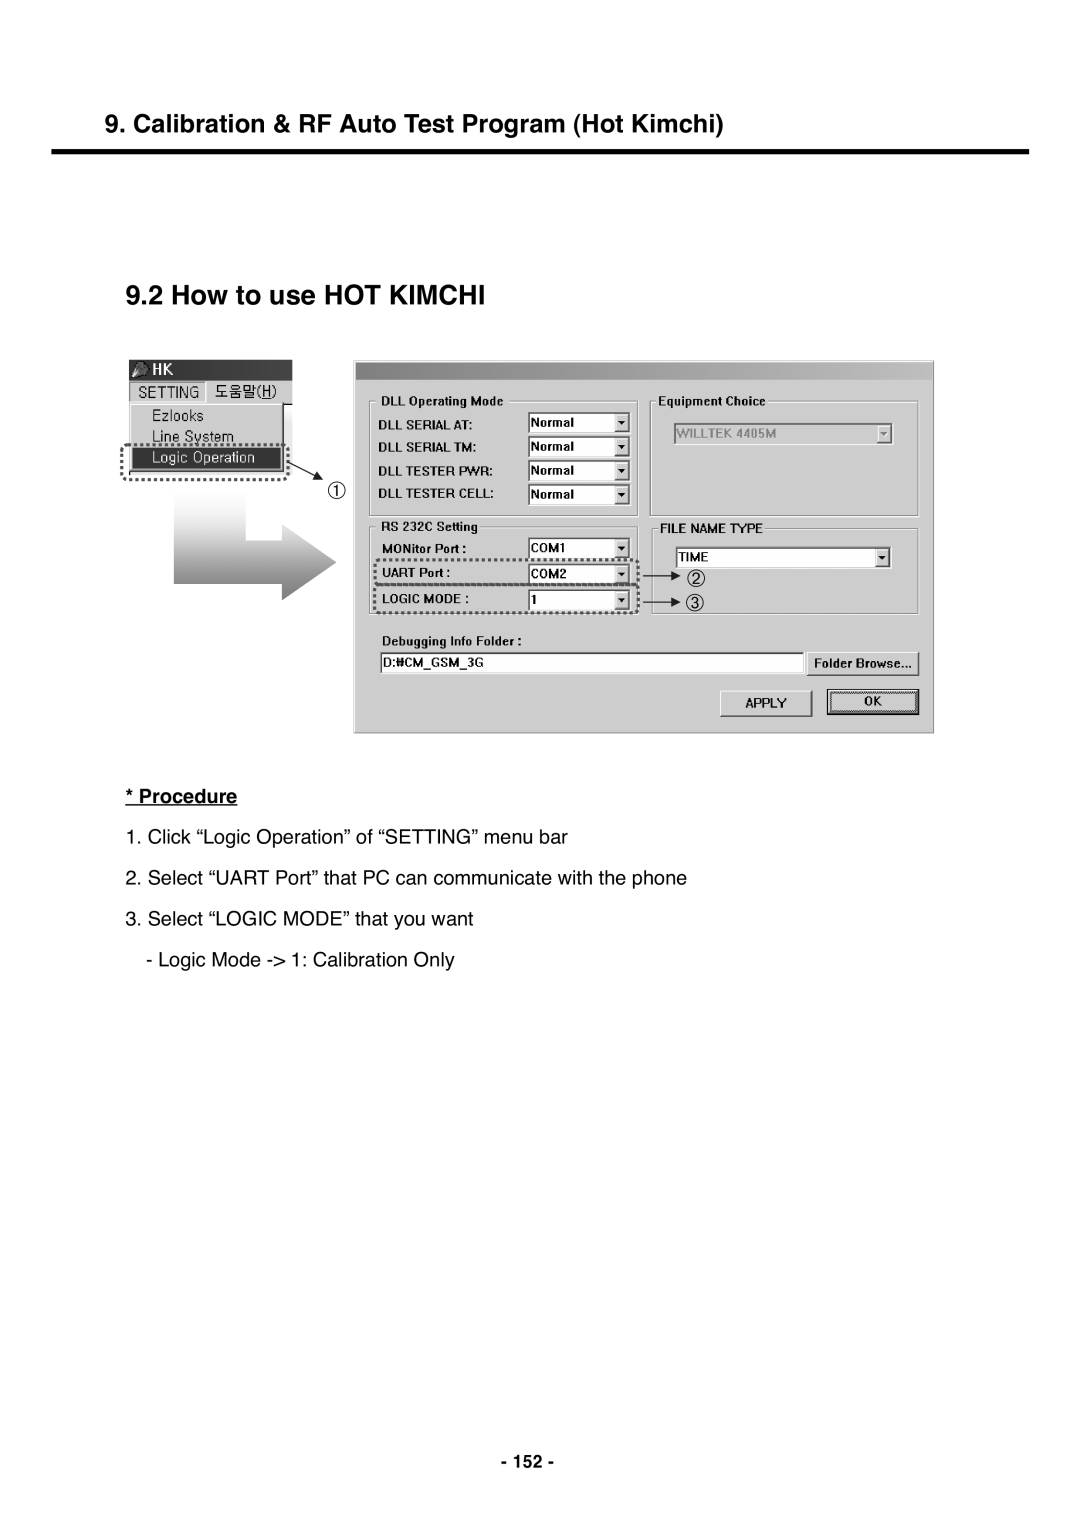 LG Electronics U250 service manual How to use HOT Kimchi, Procedure, 152 